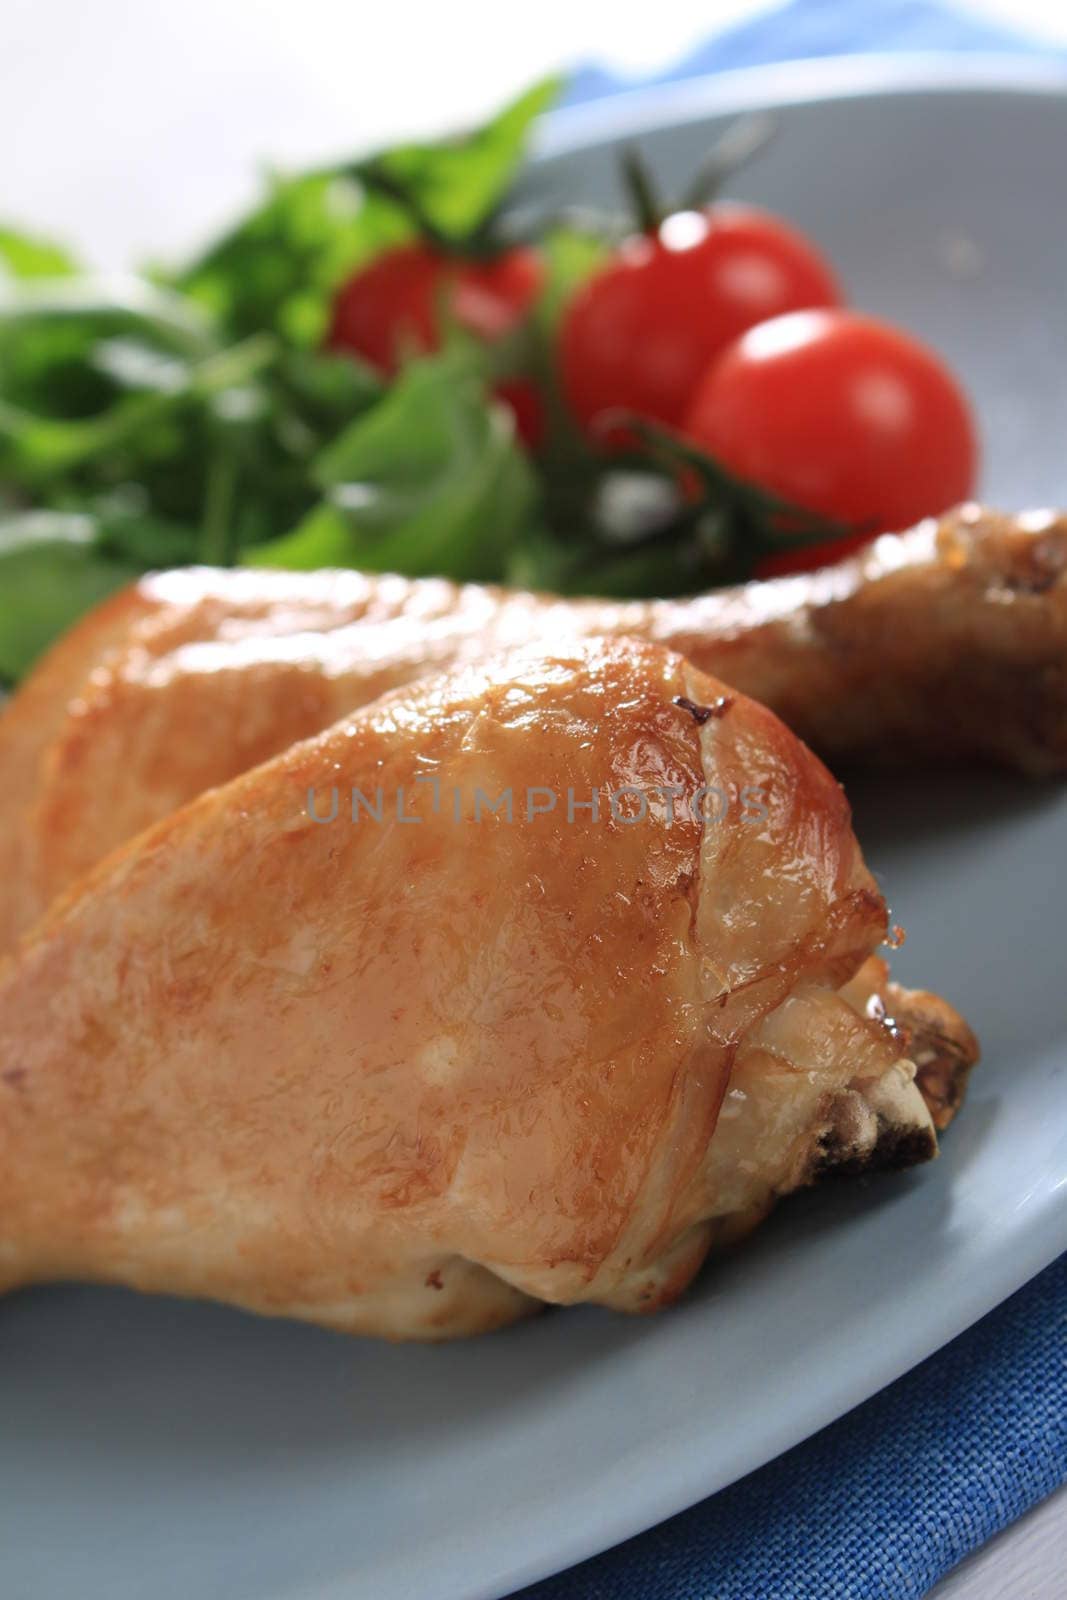 chicken dinner by neil_langan